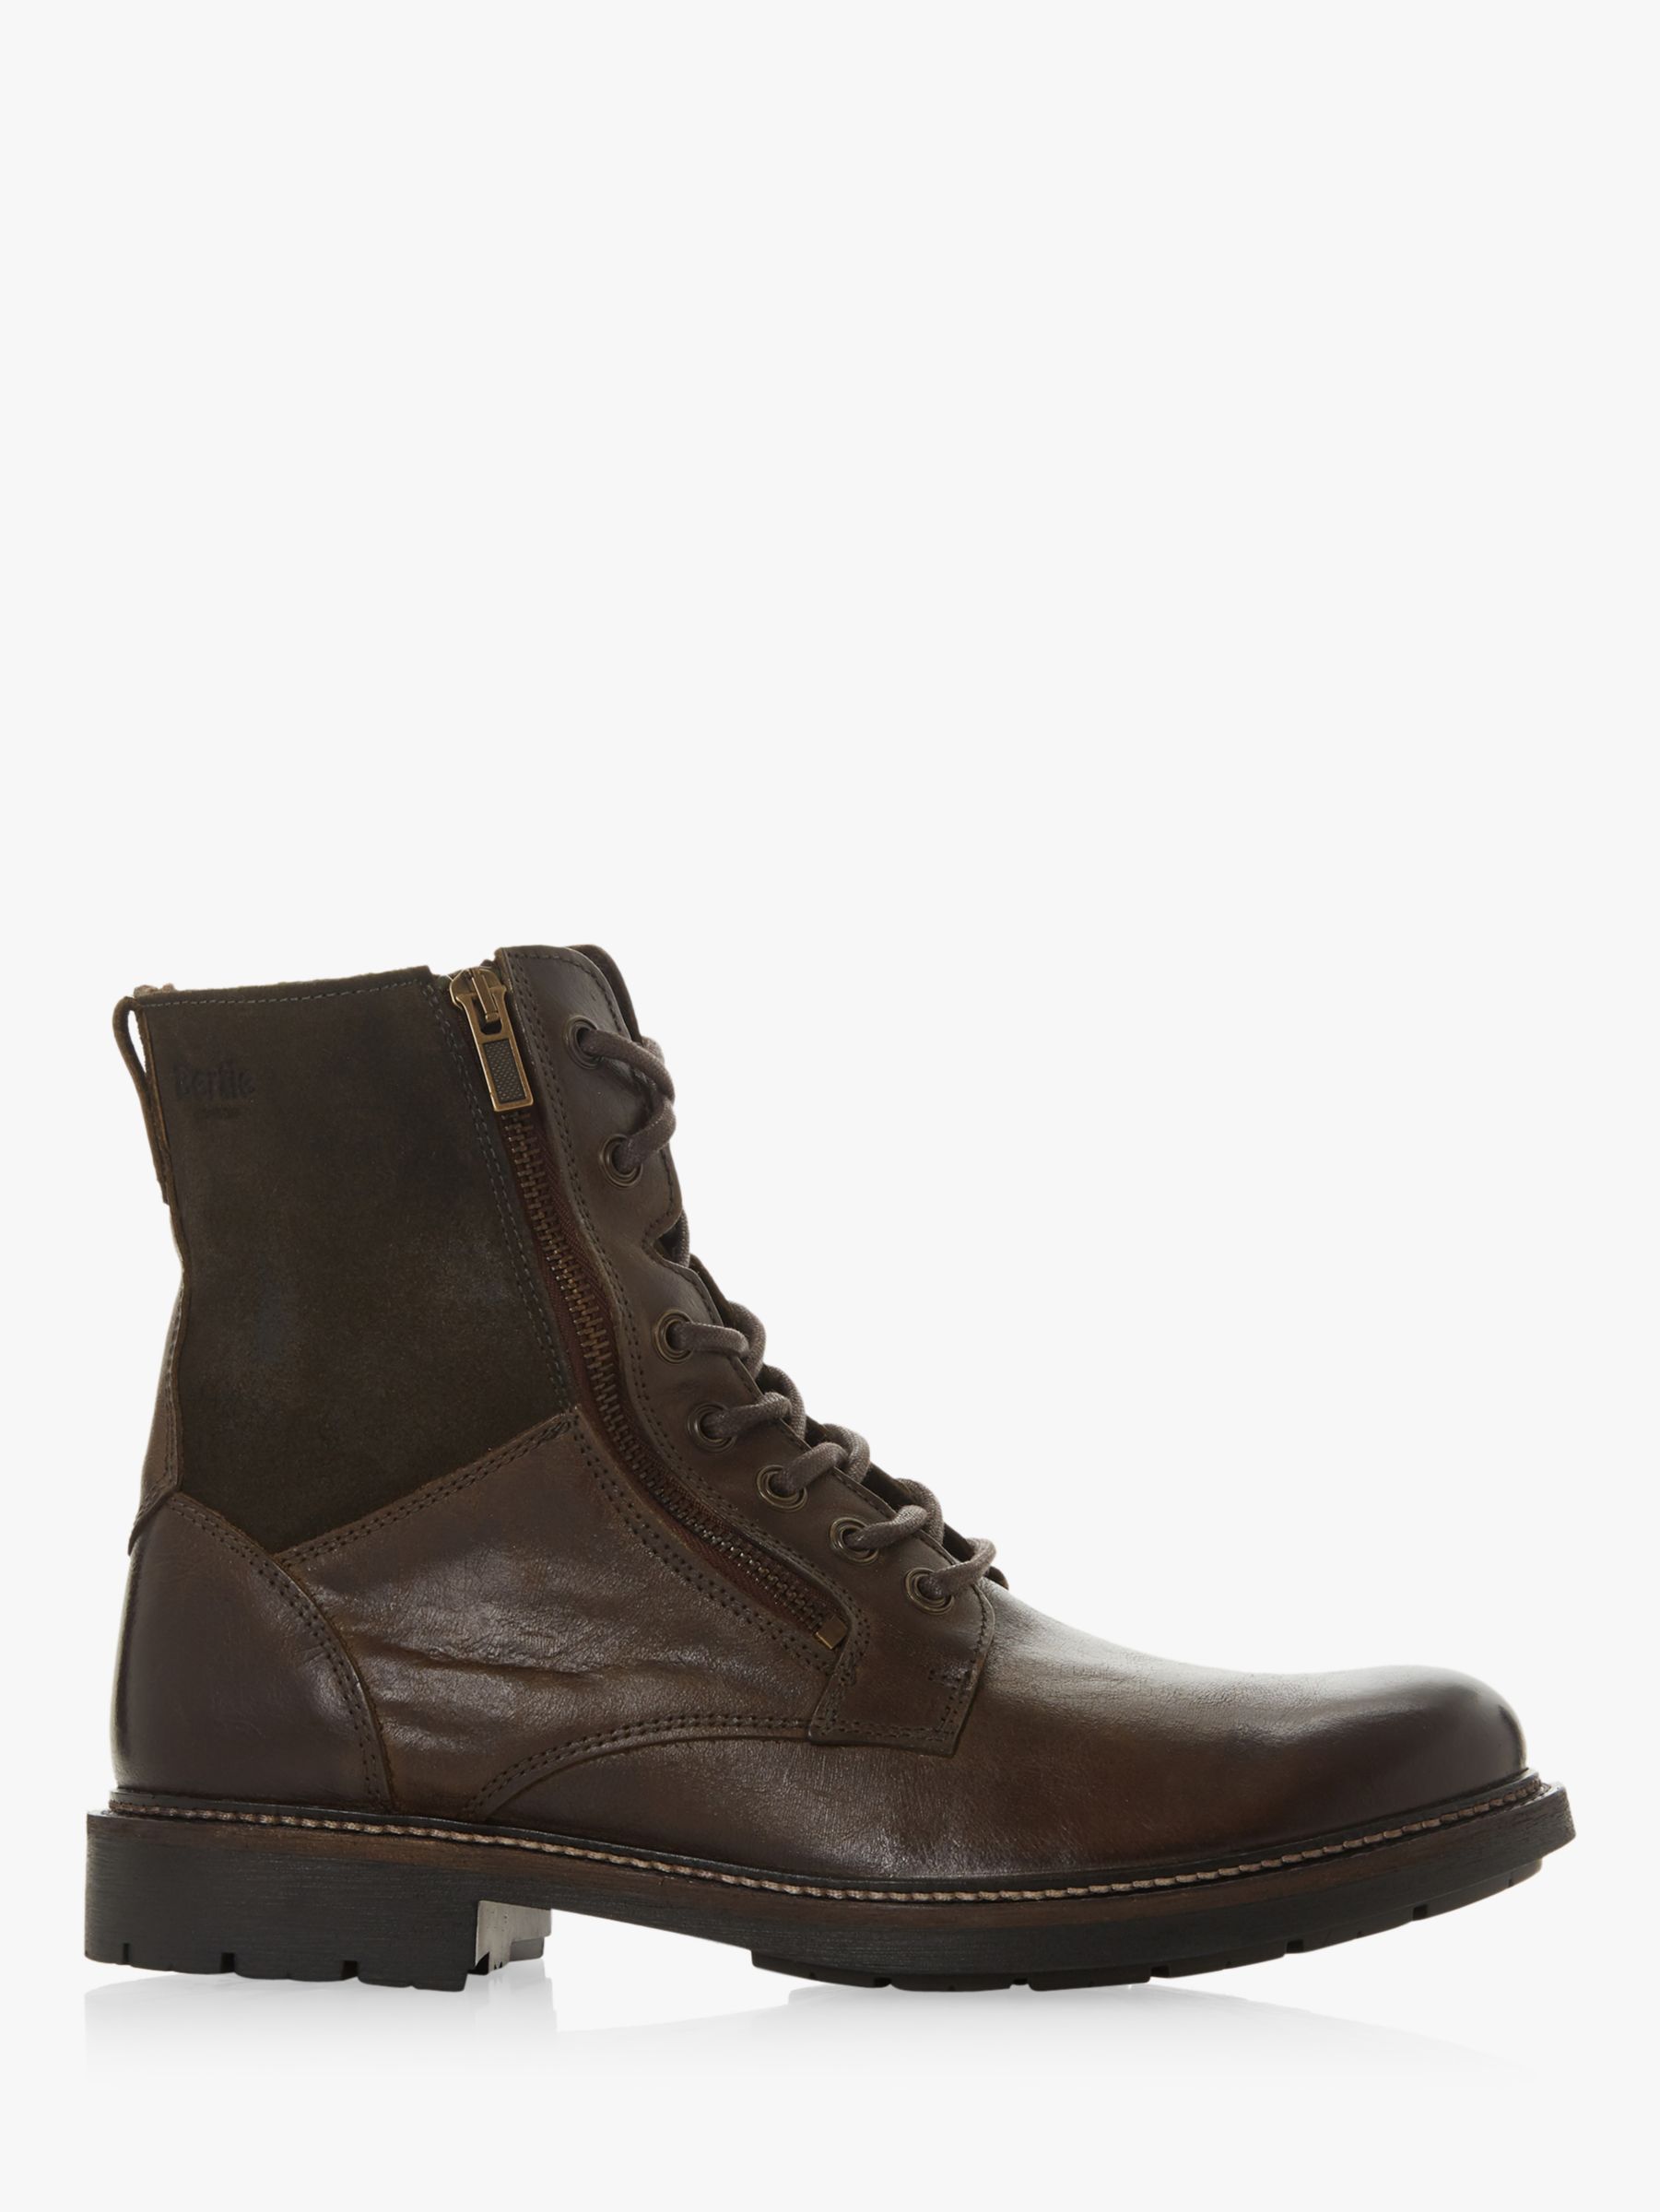 Bertie Club Leather Boot, Dark Brown